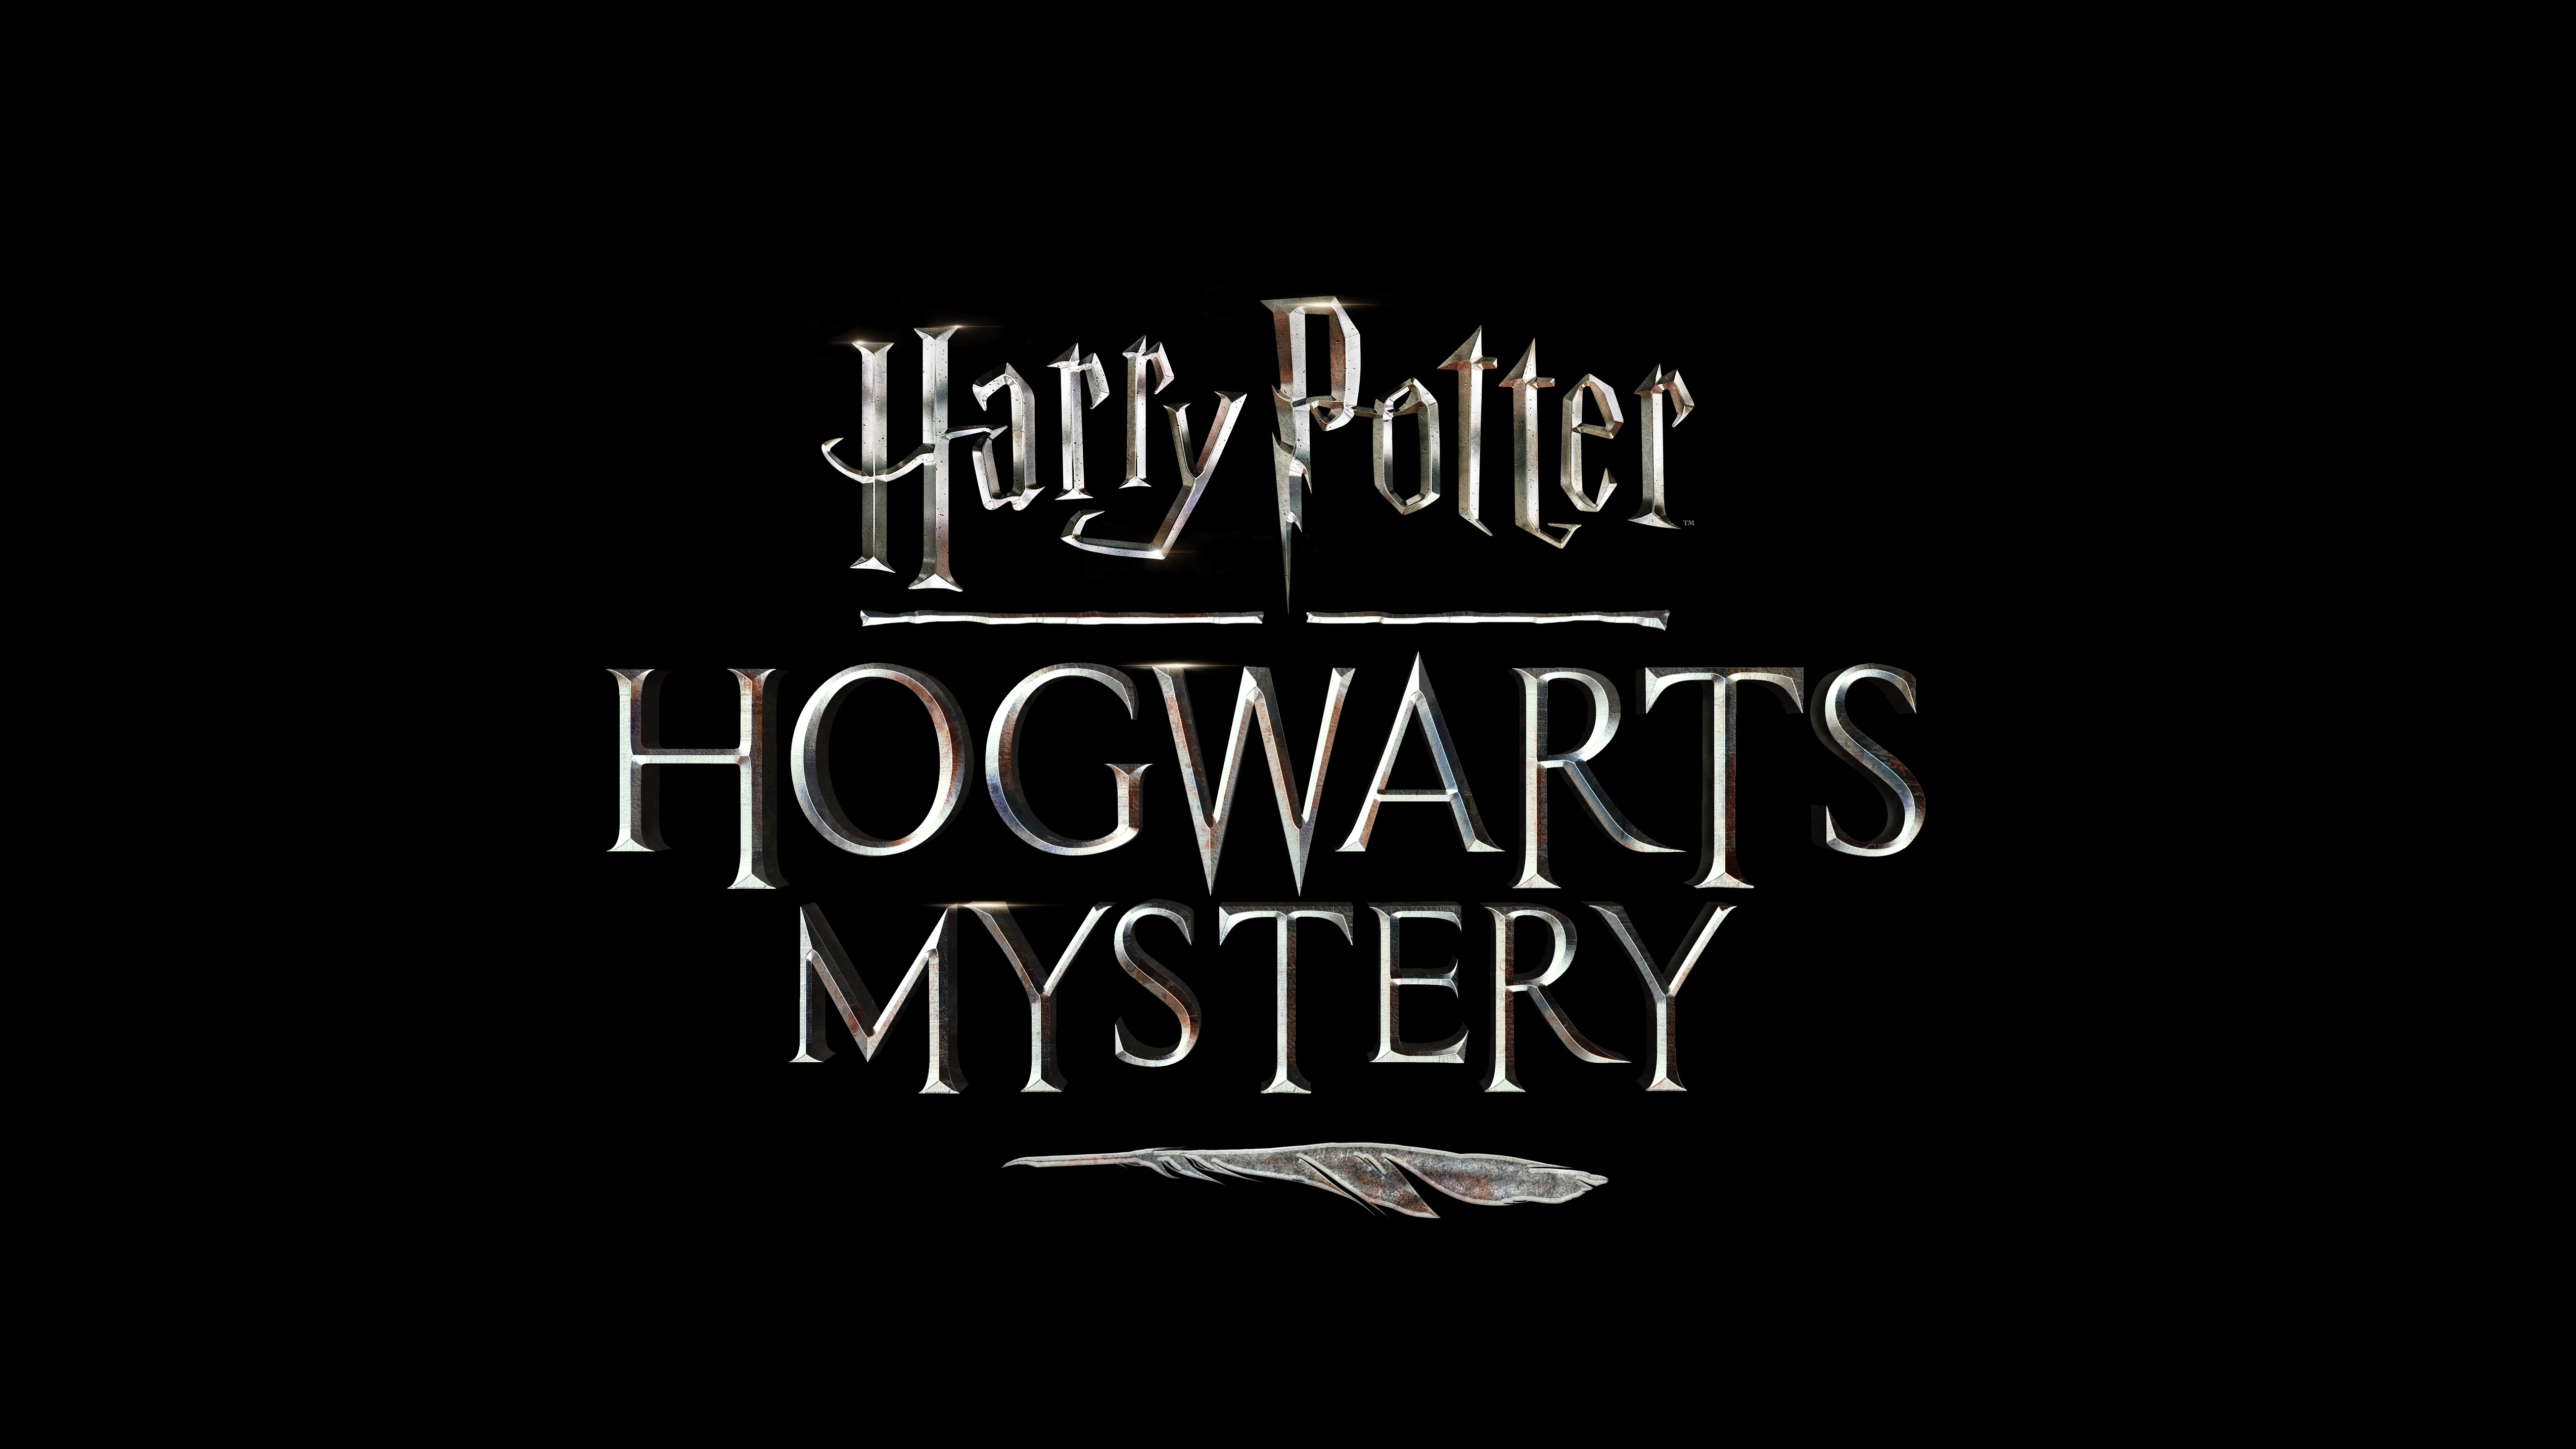 Harry Potter: Hogwarts Mystery Sudah Tersedia di Android